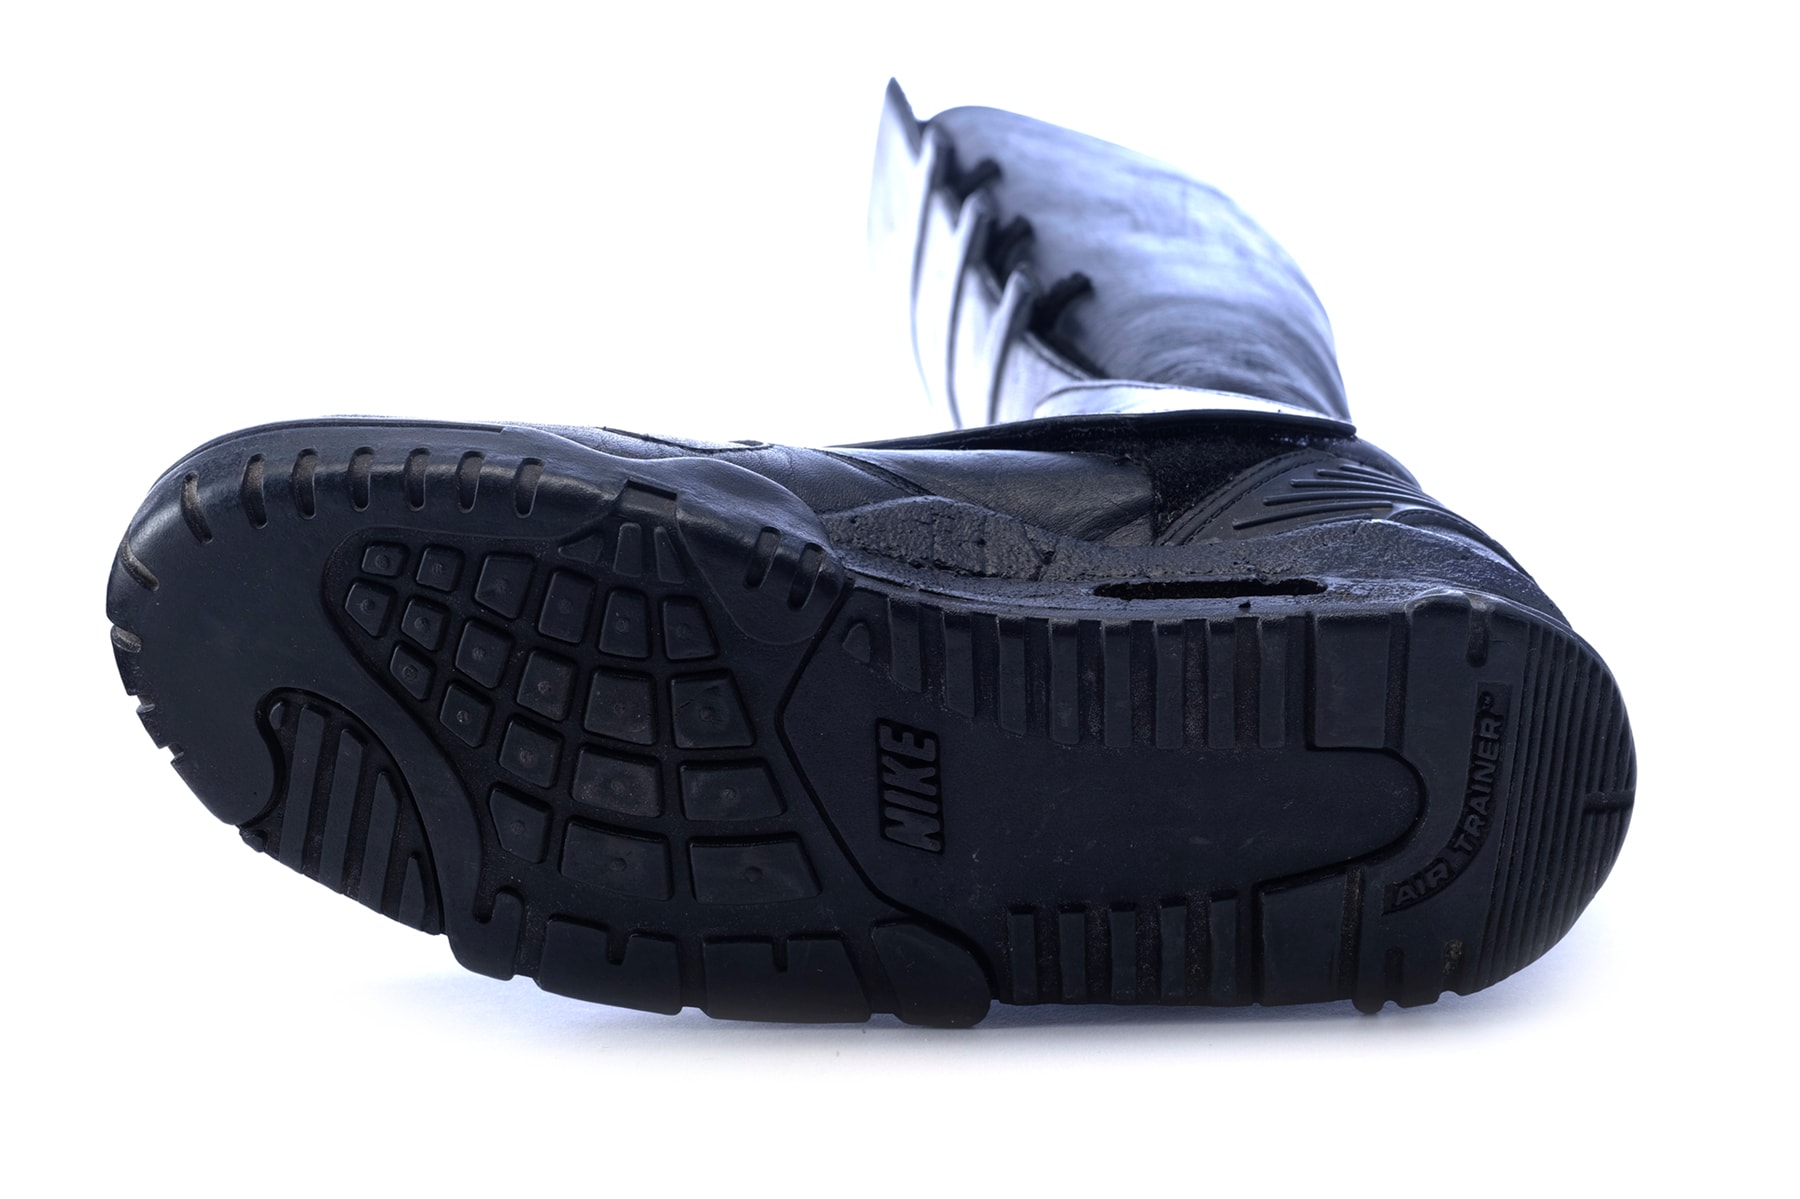 Batman 1989 Michael Keaton Nike Air Trainer Bat Boots Propstore Auction shoe sneakers footwear kicks props 